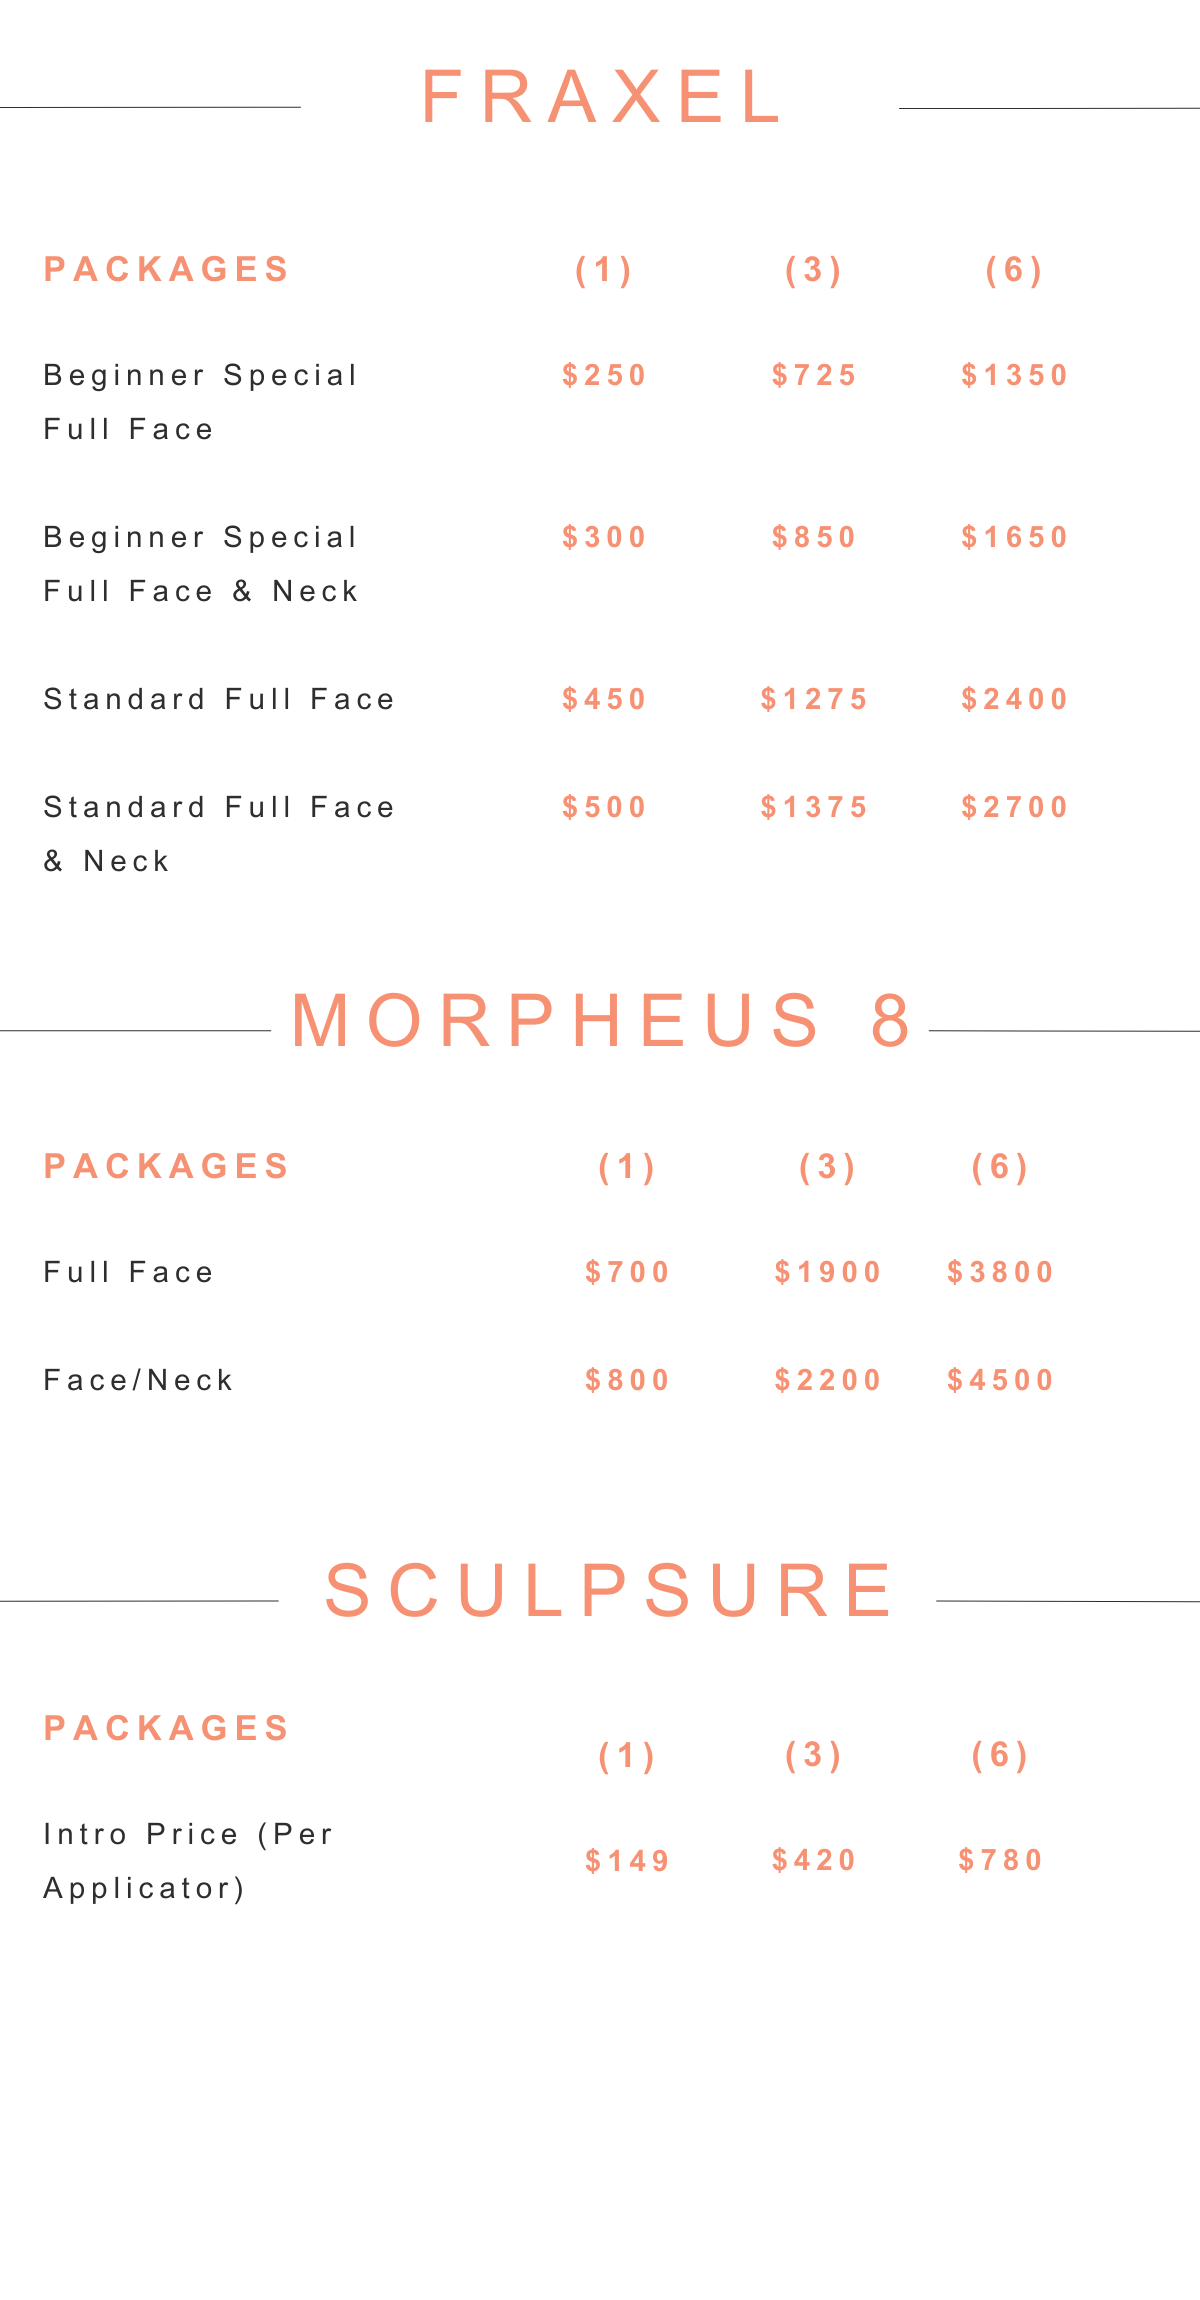 Morpheus8 Fraxel Sculpsure pricing near me